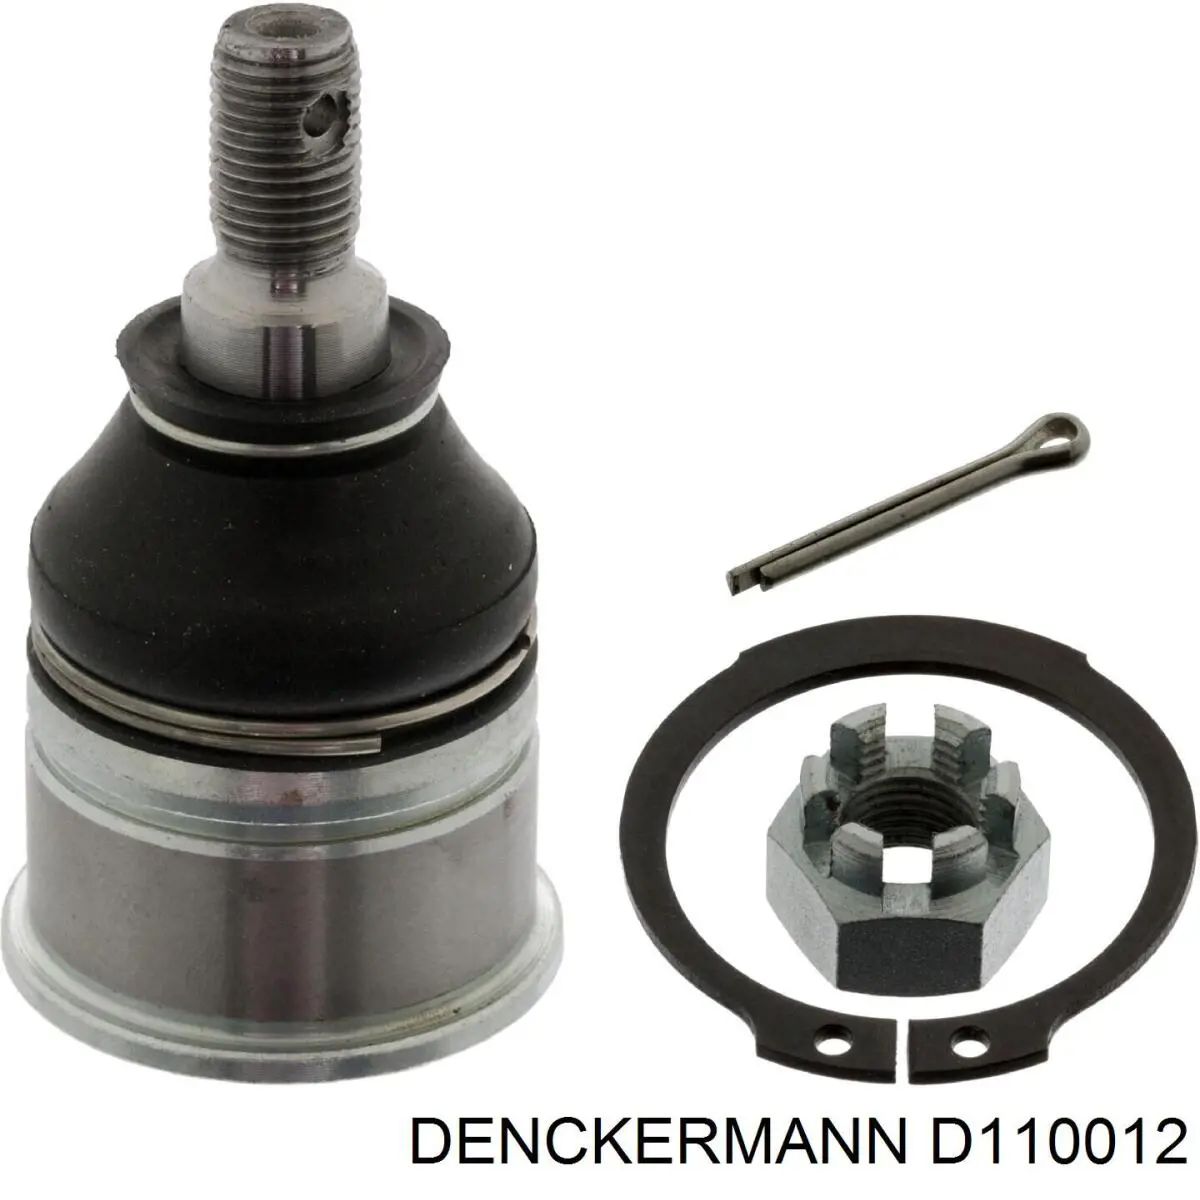 D110012 Denckermann шаровая опора нижняя